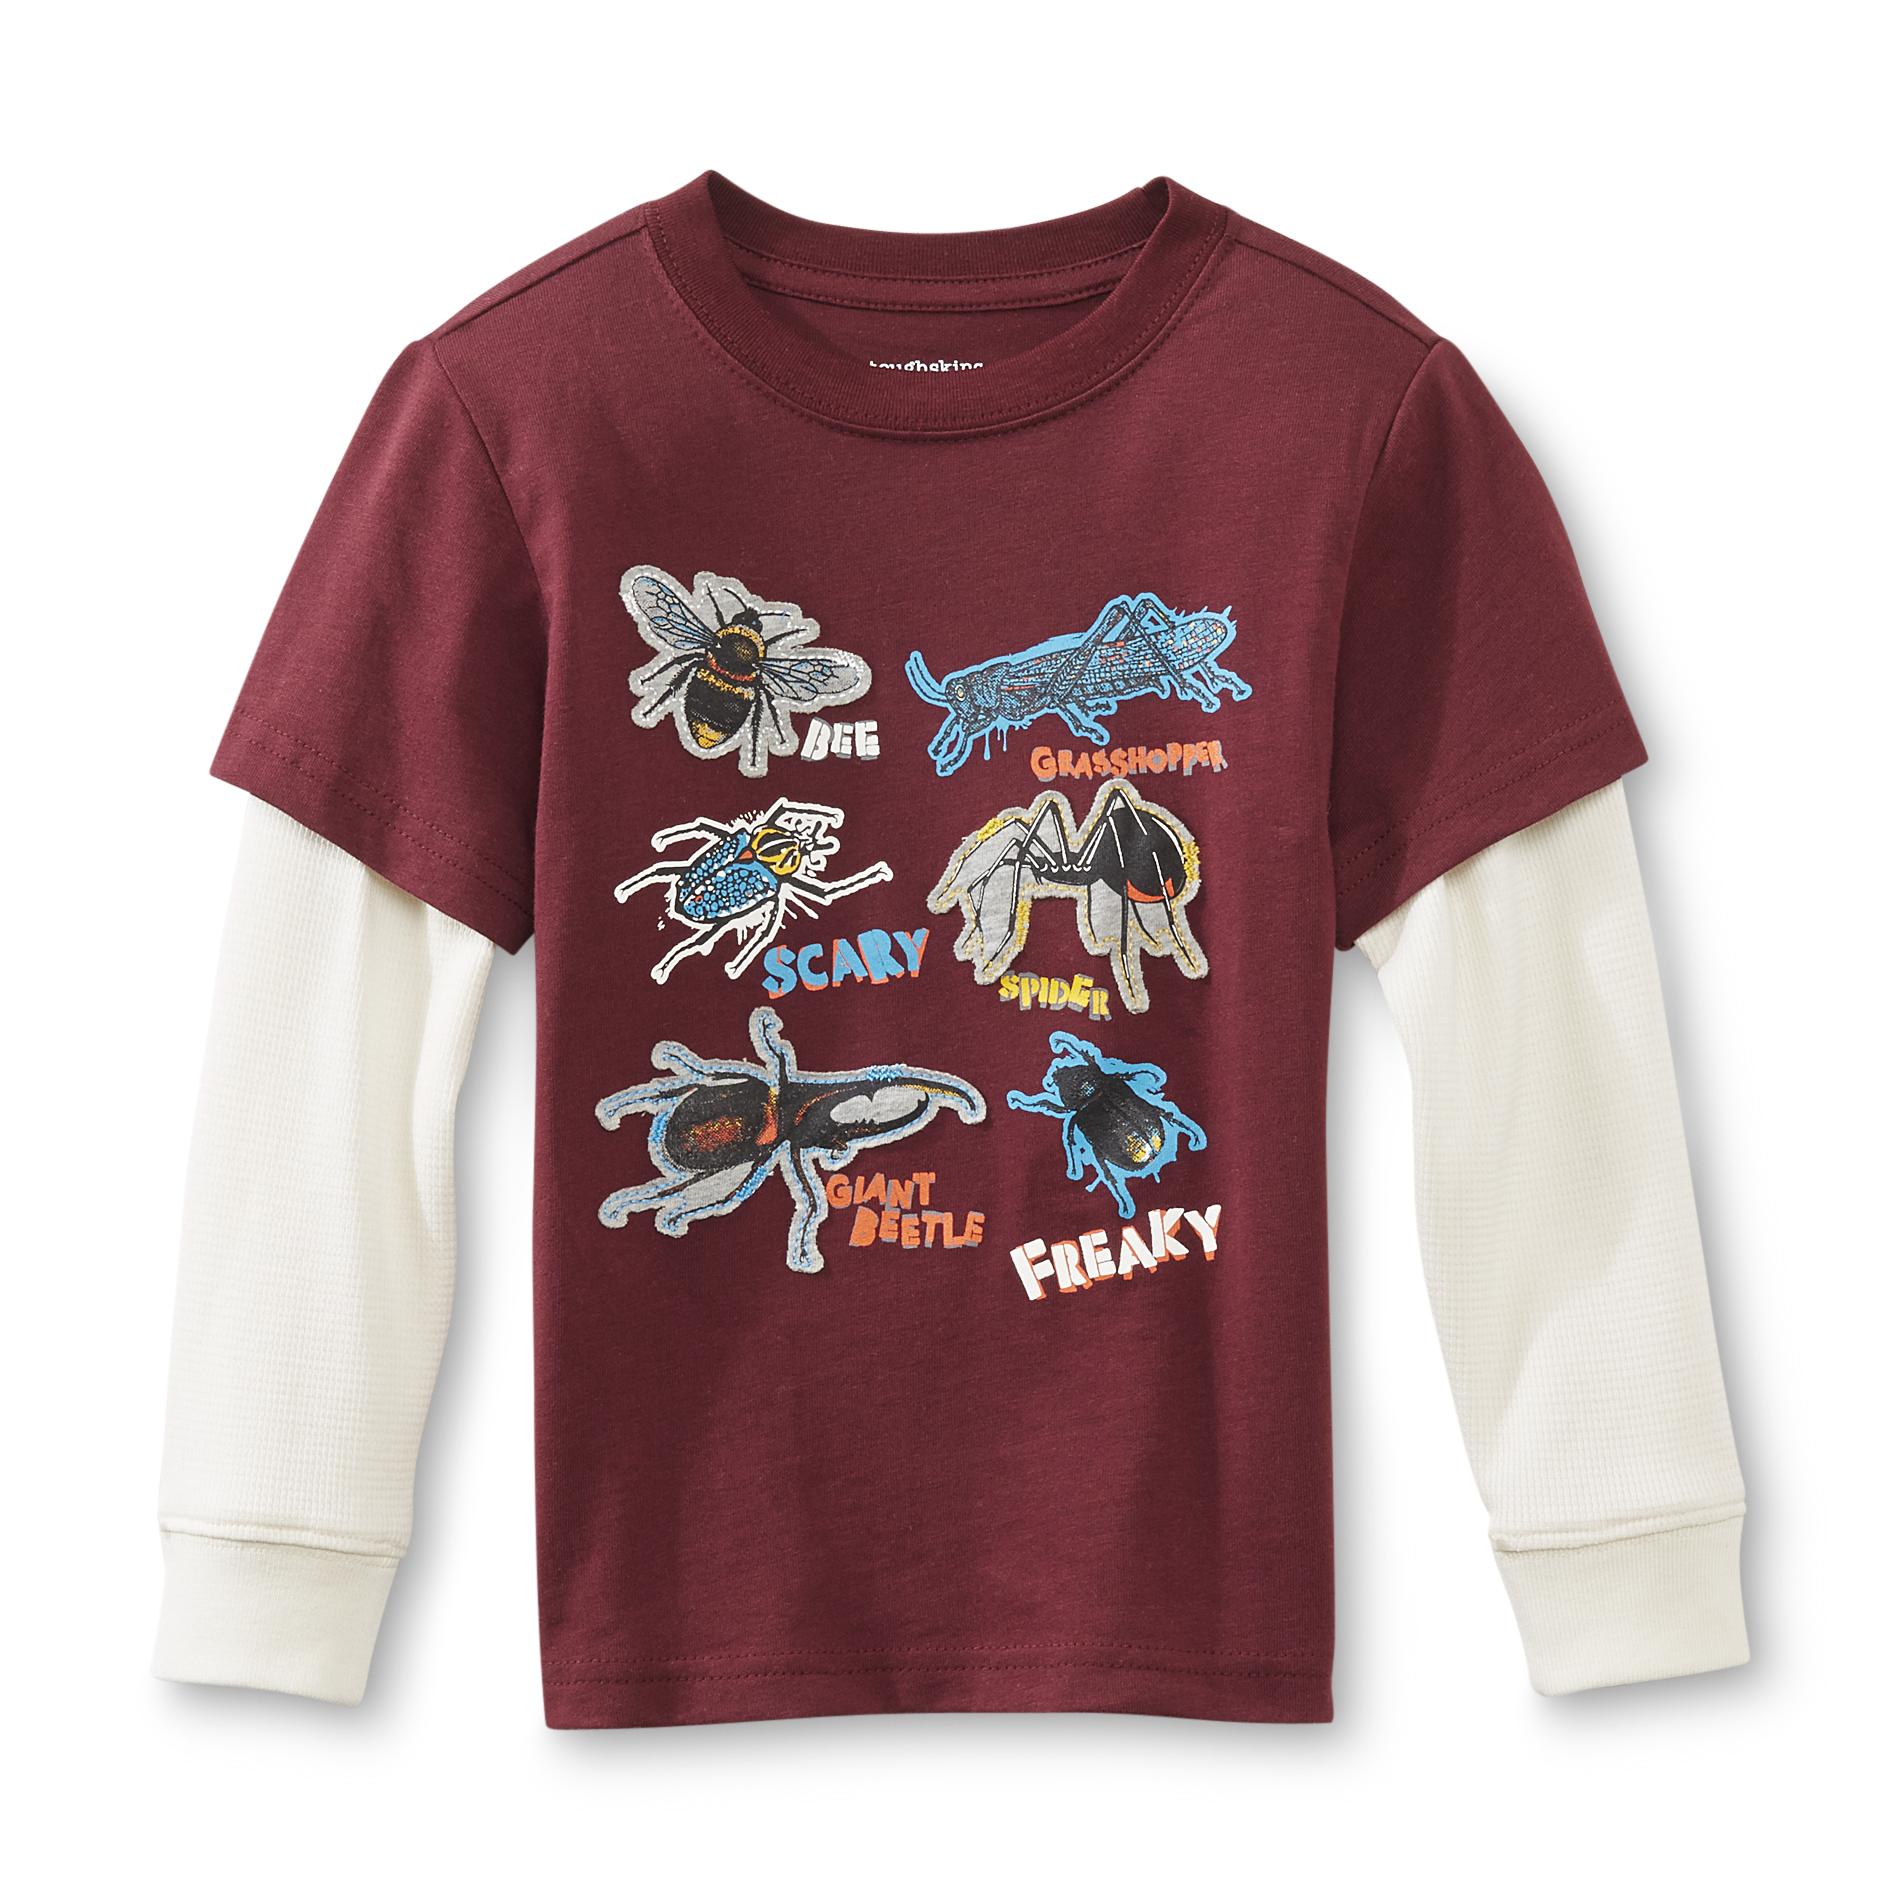 Toughskins Infant & Toddler Boy's Graphic T-Shirt - Bugs